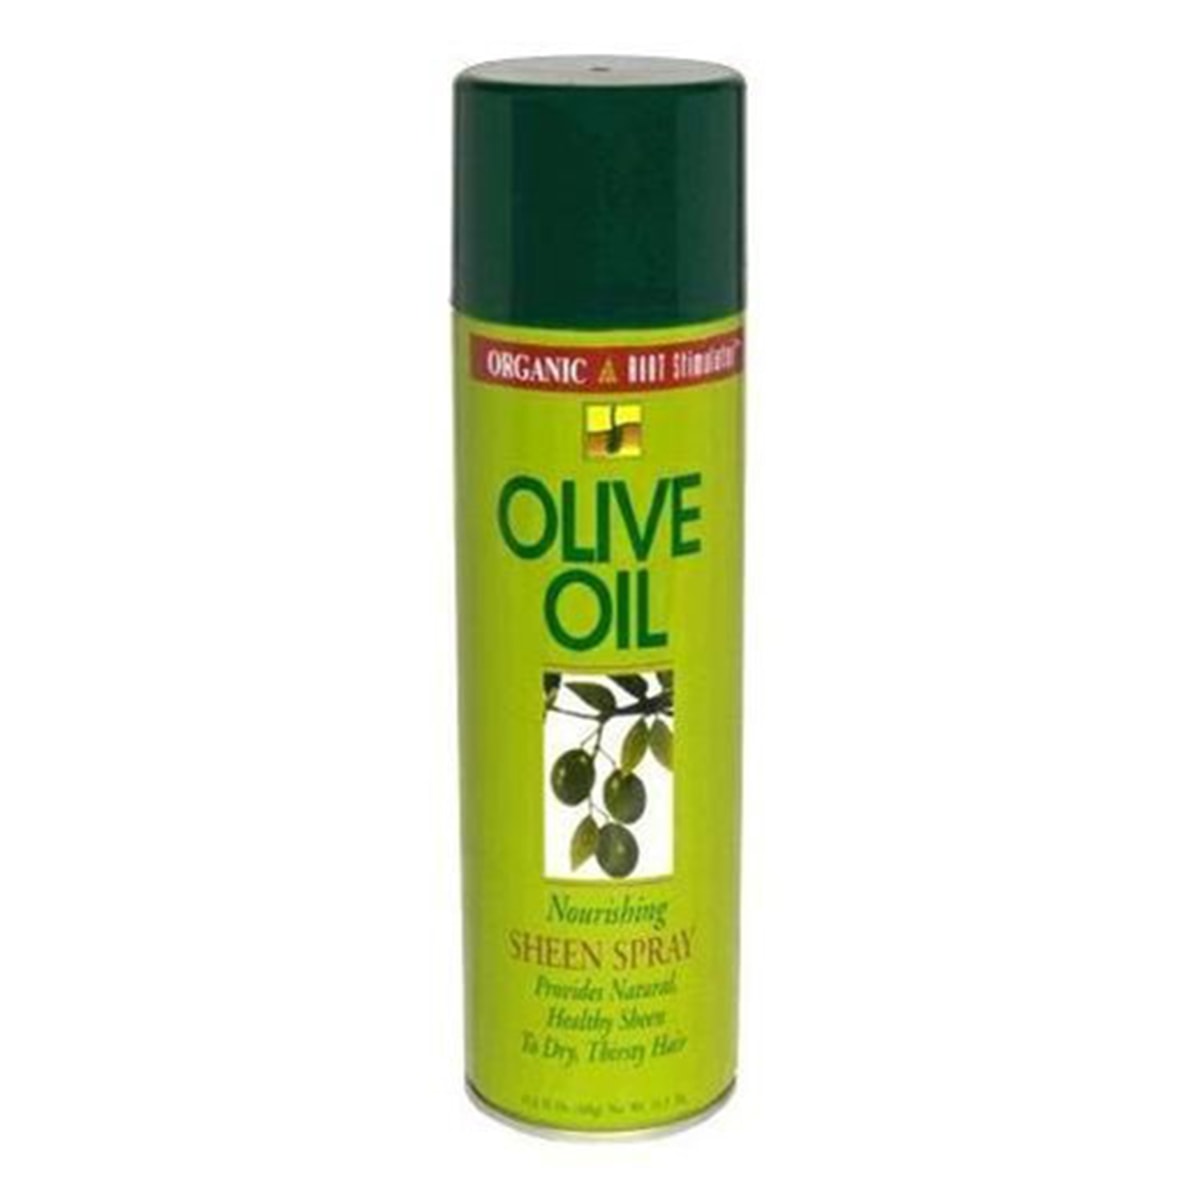 Buy Organic Root Stimulator (ORS) Olive Oil Nourishing Sheen Spray - 326 gm